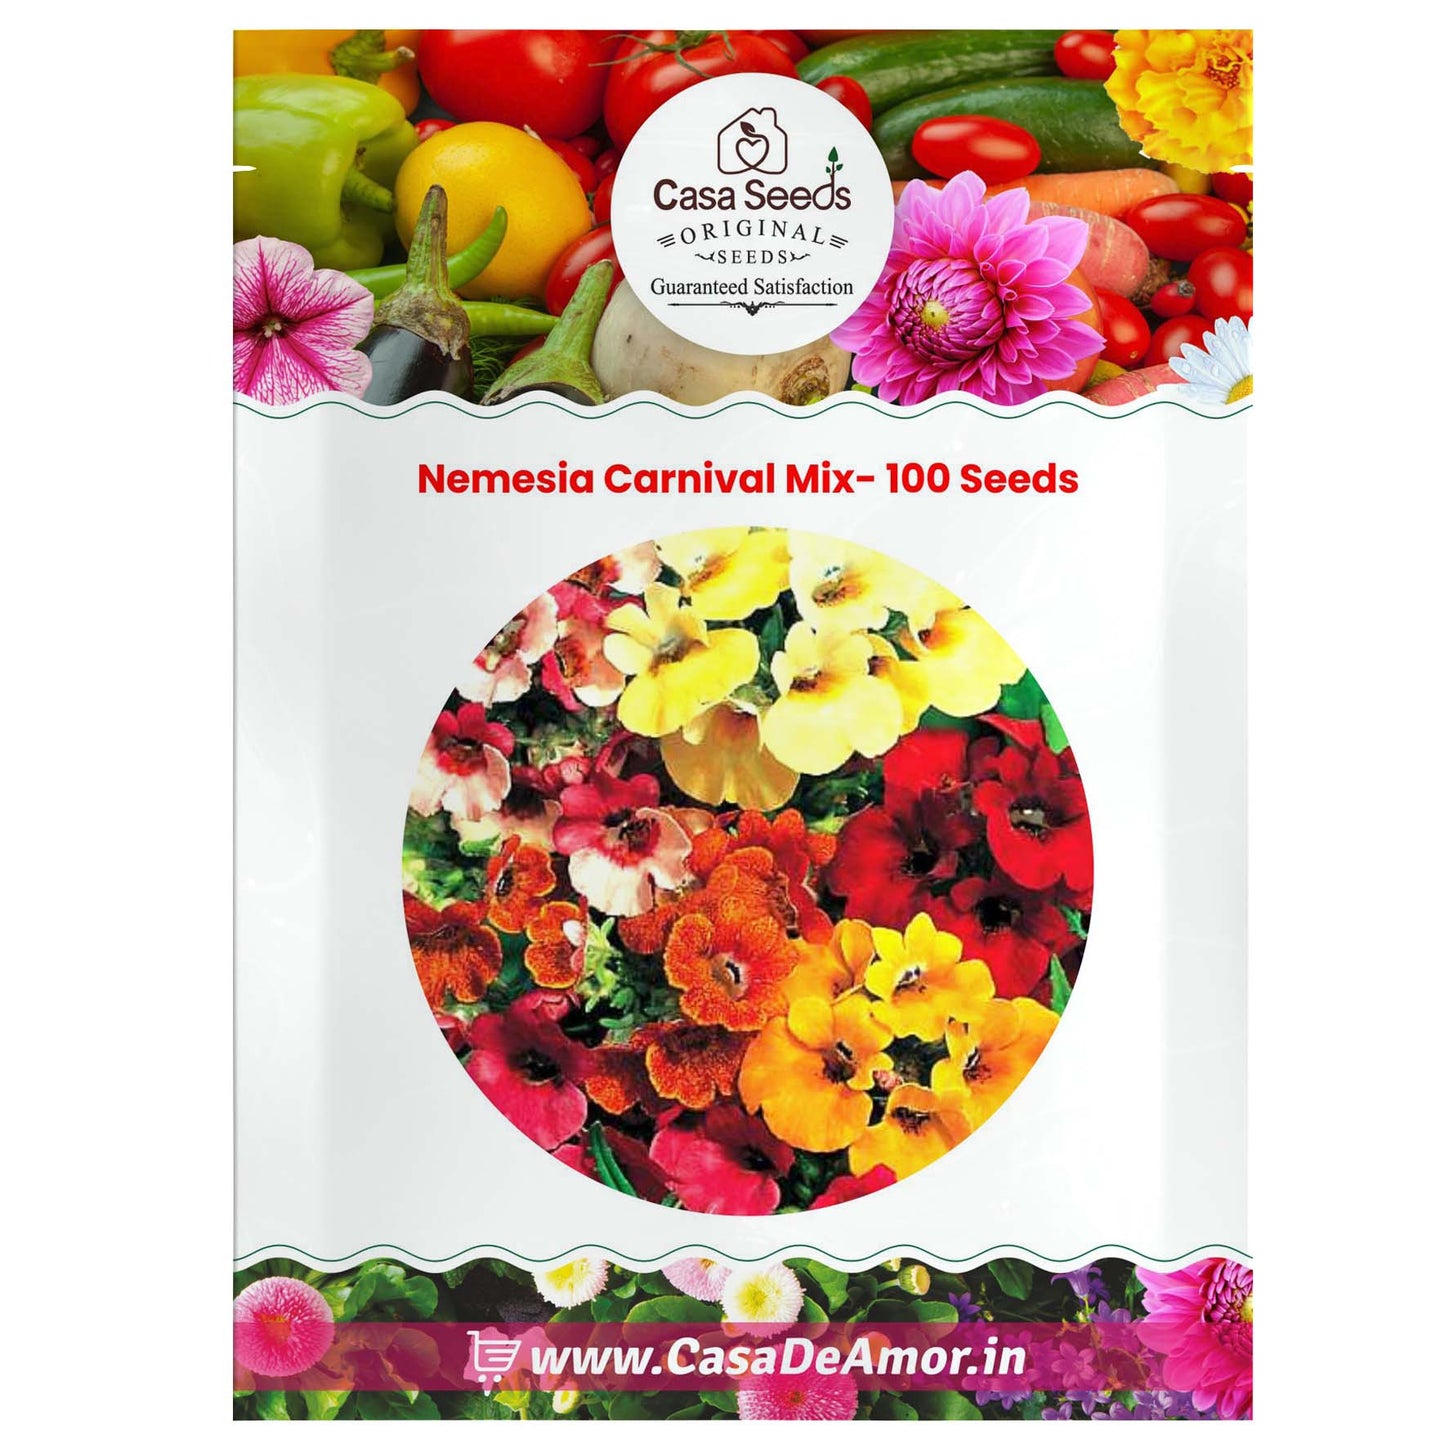 Nemesia Carnival Mix- 100 Seeds